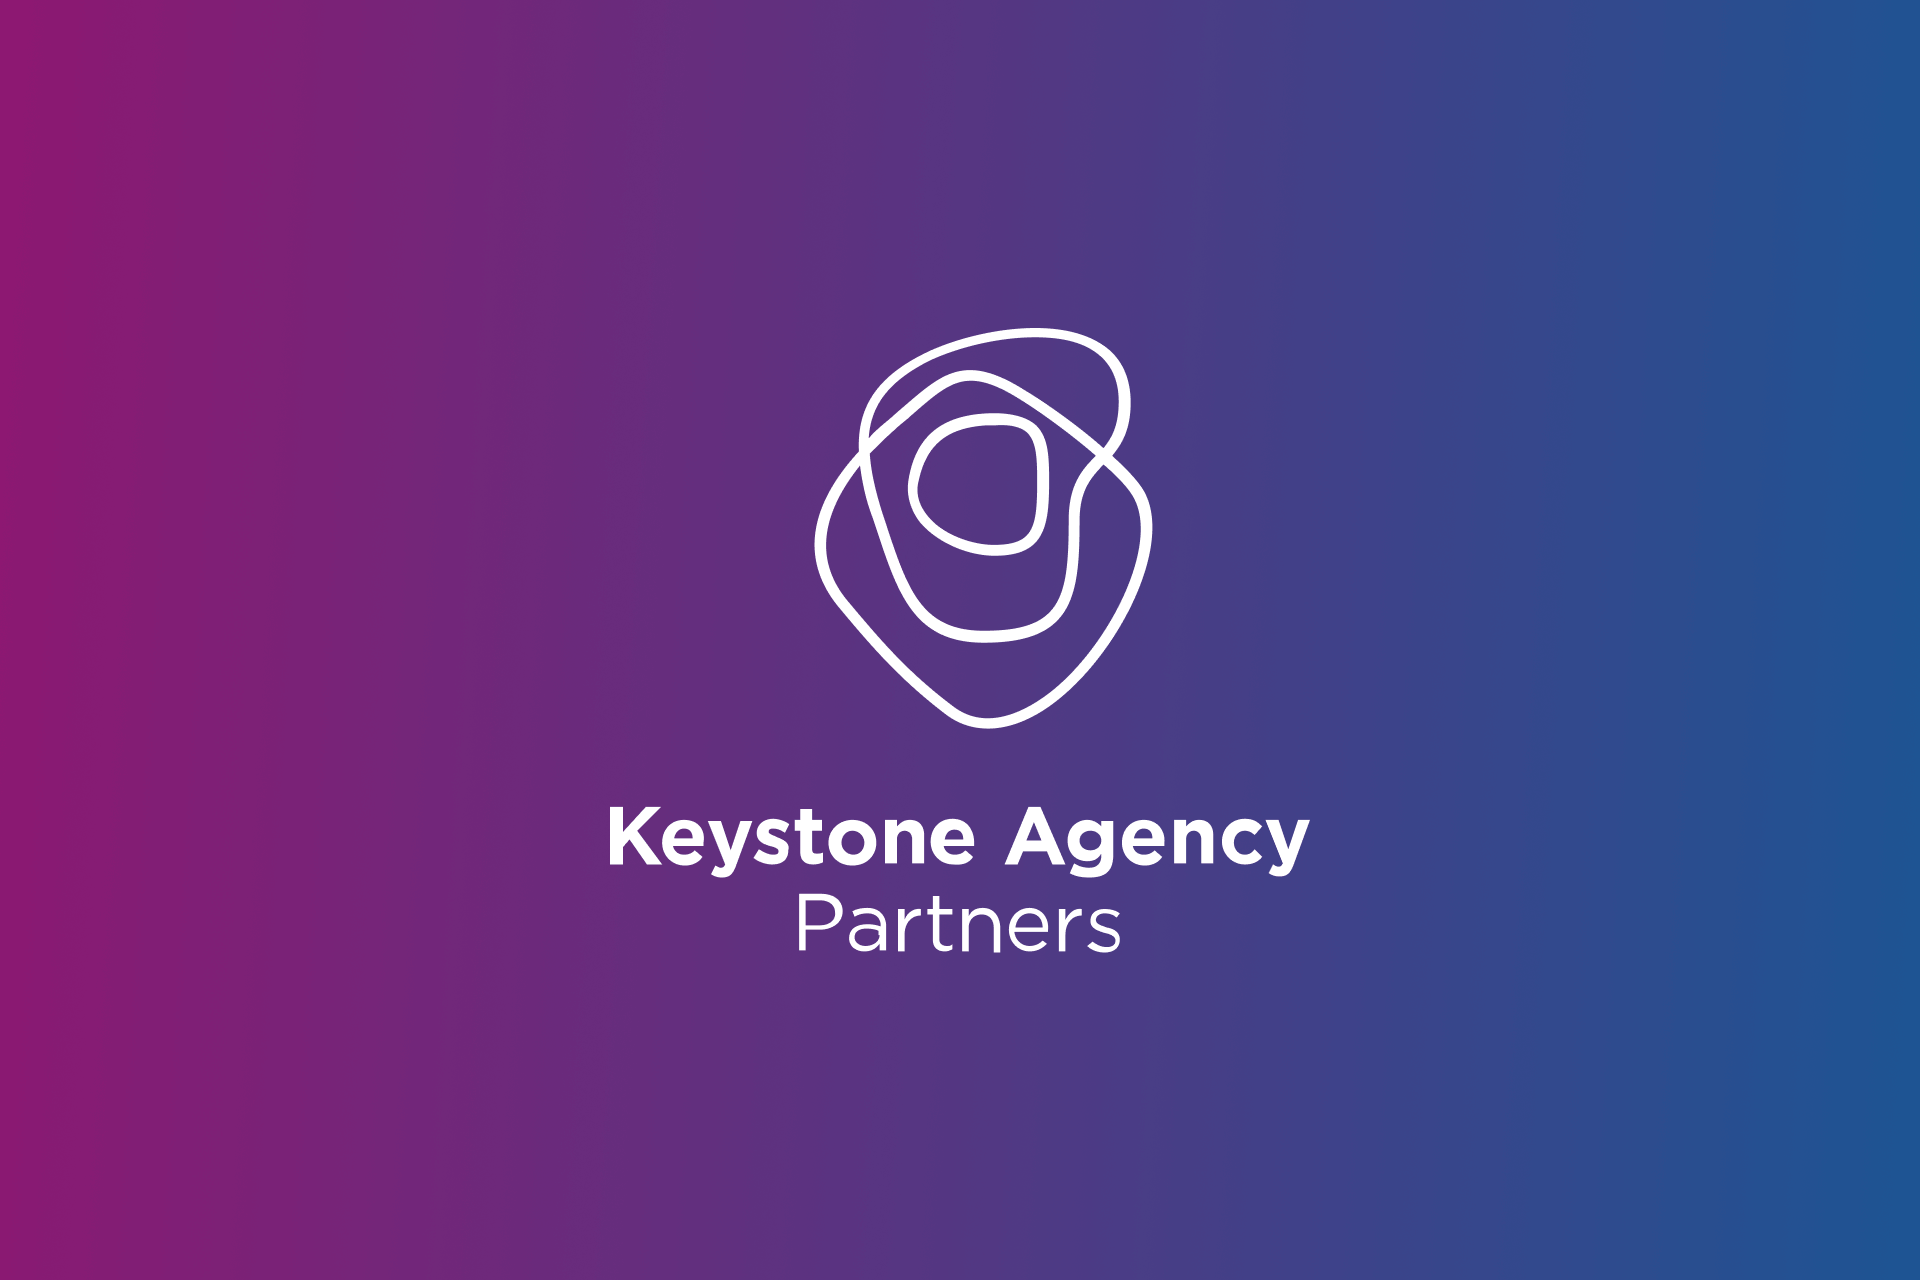 Keystone Agency Partners Upsizes Existing Senior Credit Facility to $265 Million Expands Syndicate to Fund Strategic Growth Initiatives